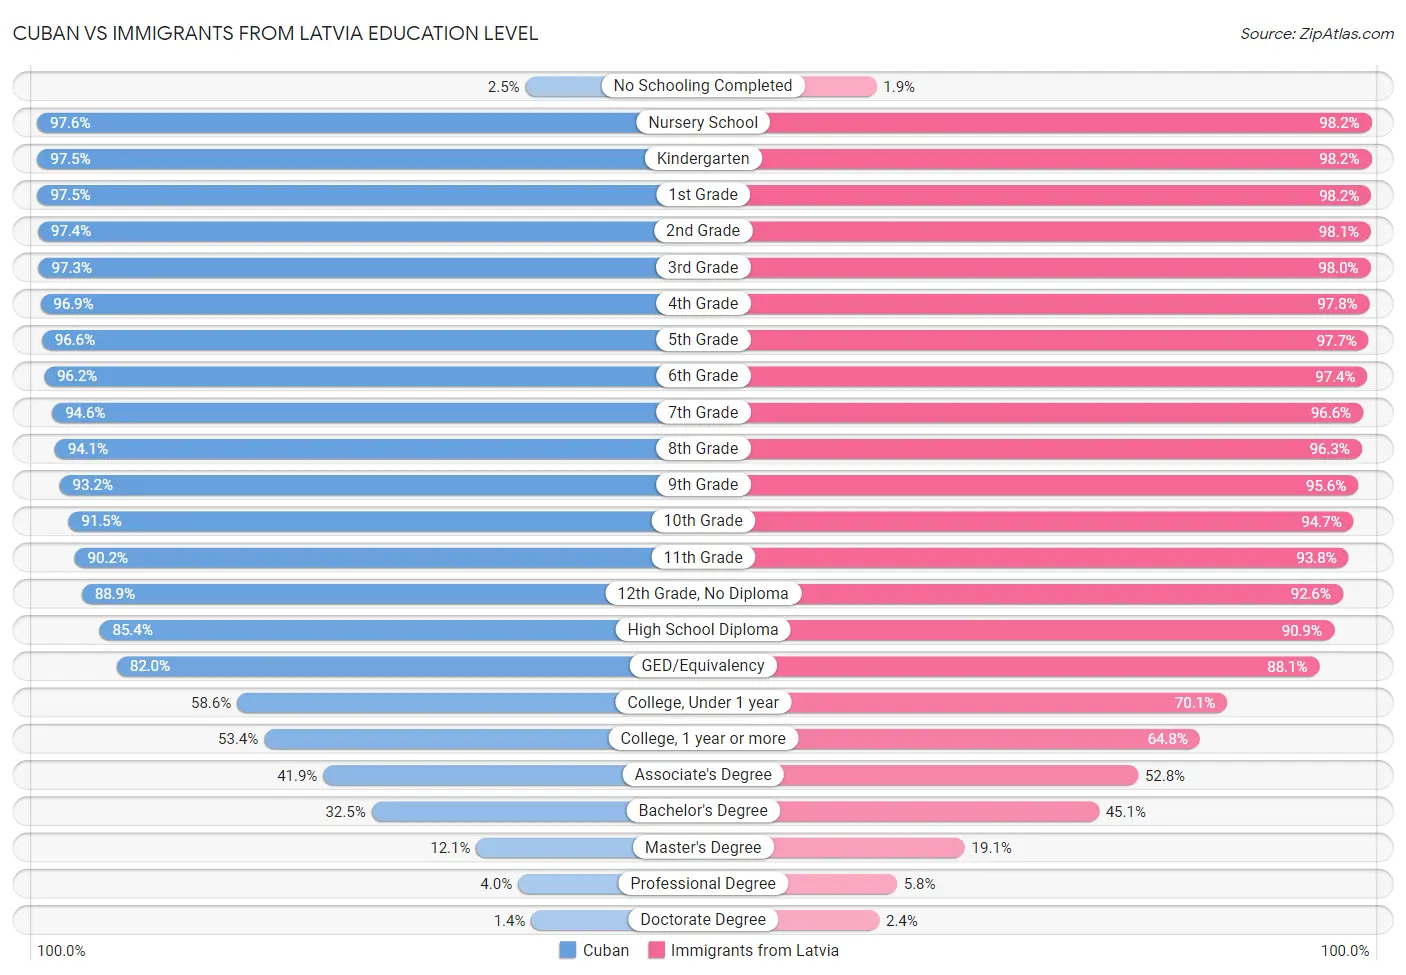 Cuban vs Immigrants from Latvia Education Level